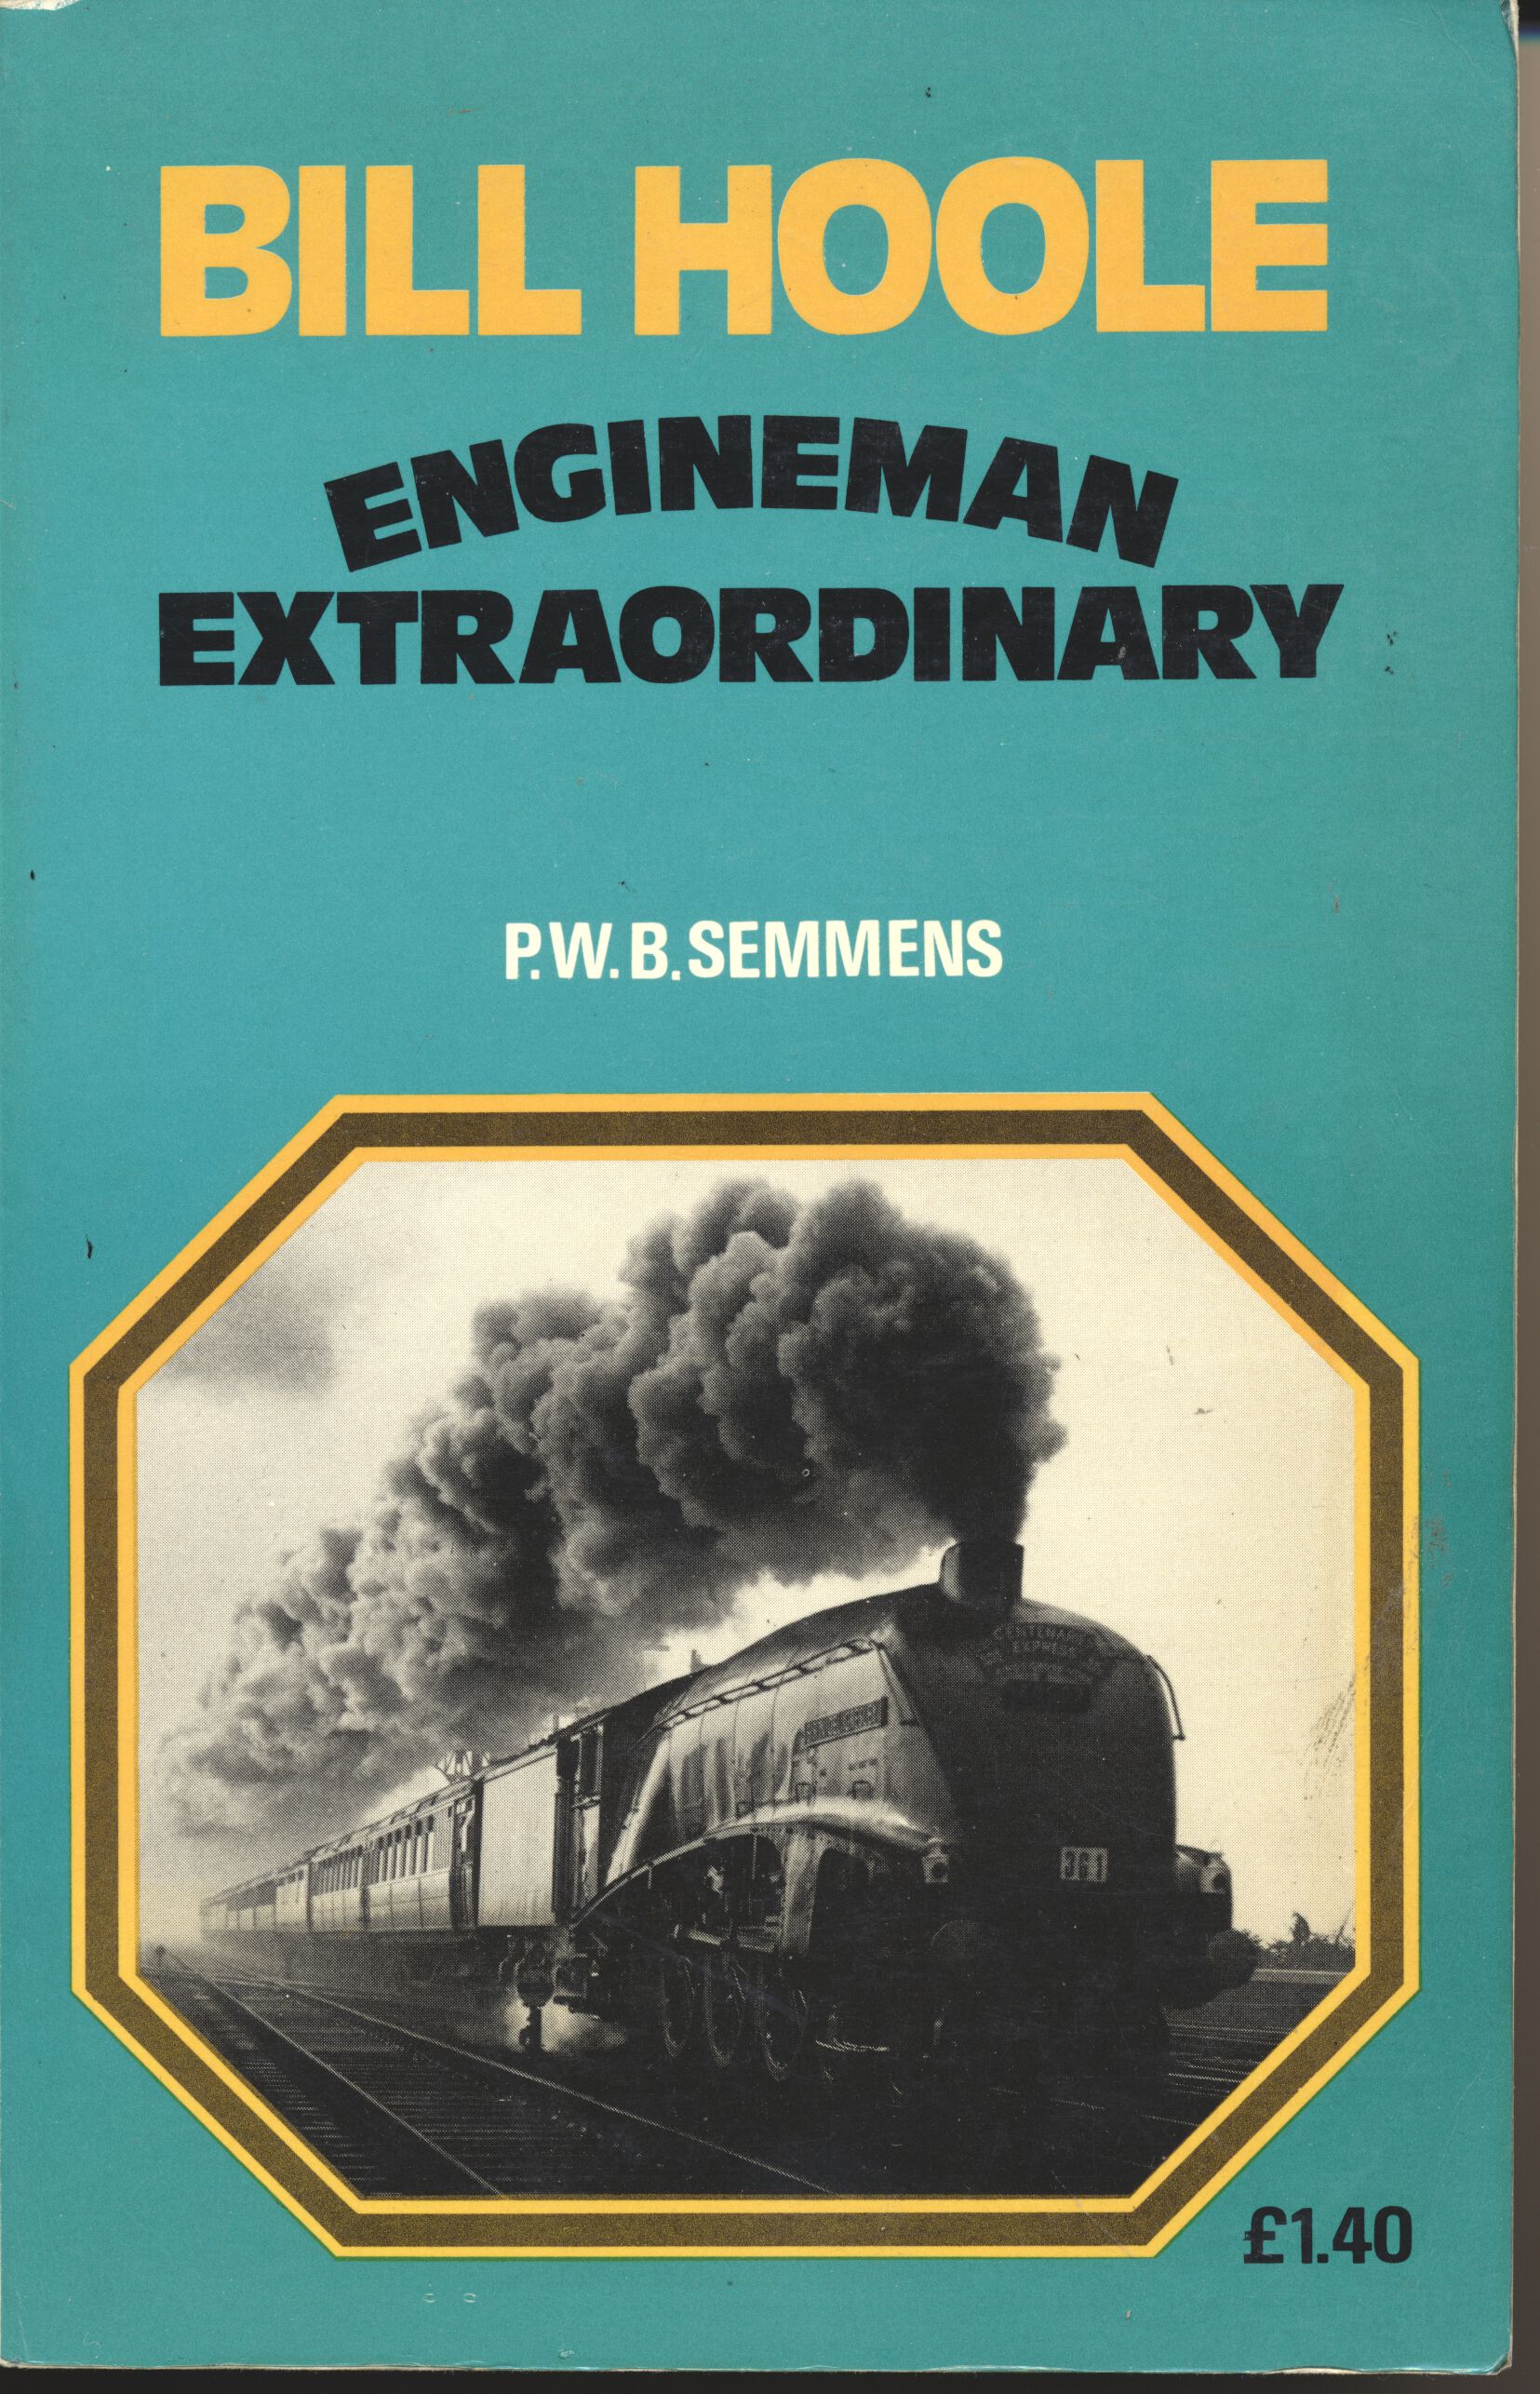 Bill Hoole Engineman Extraodinary - P W B Semmens